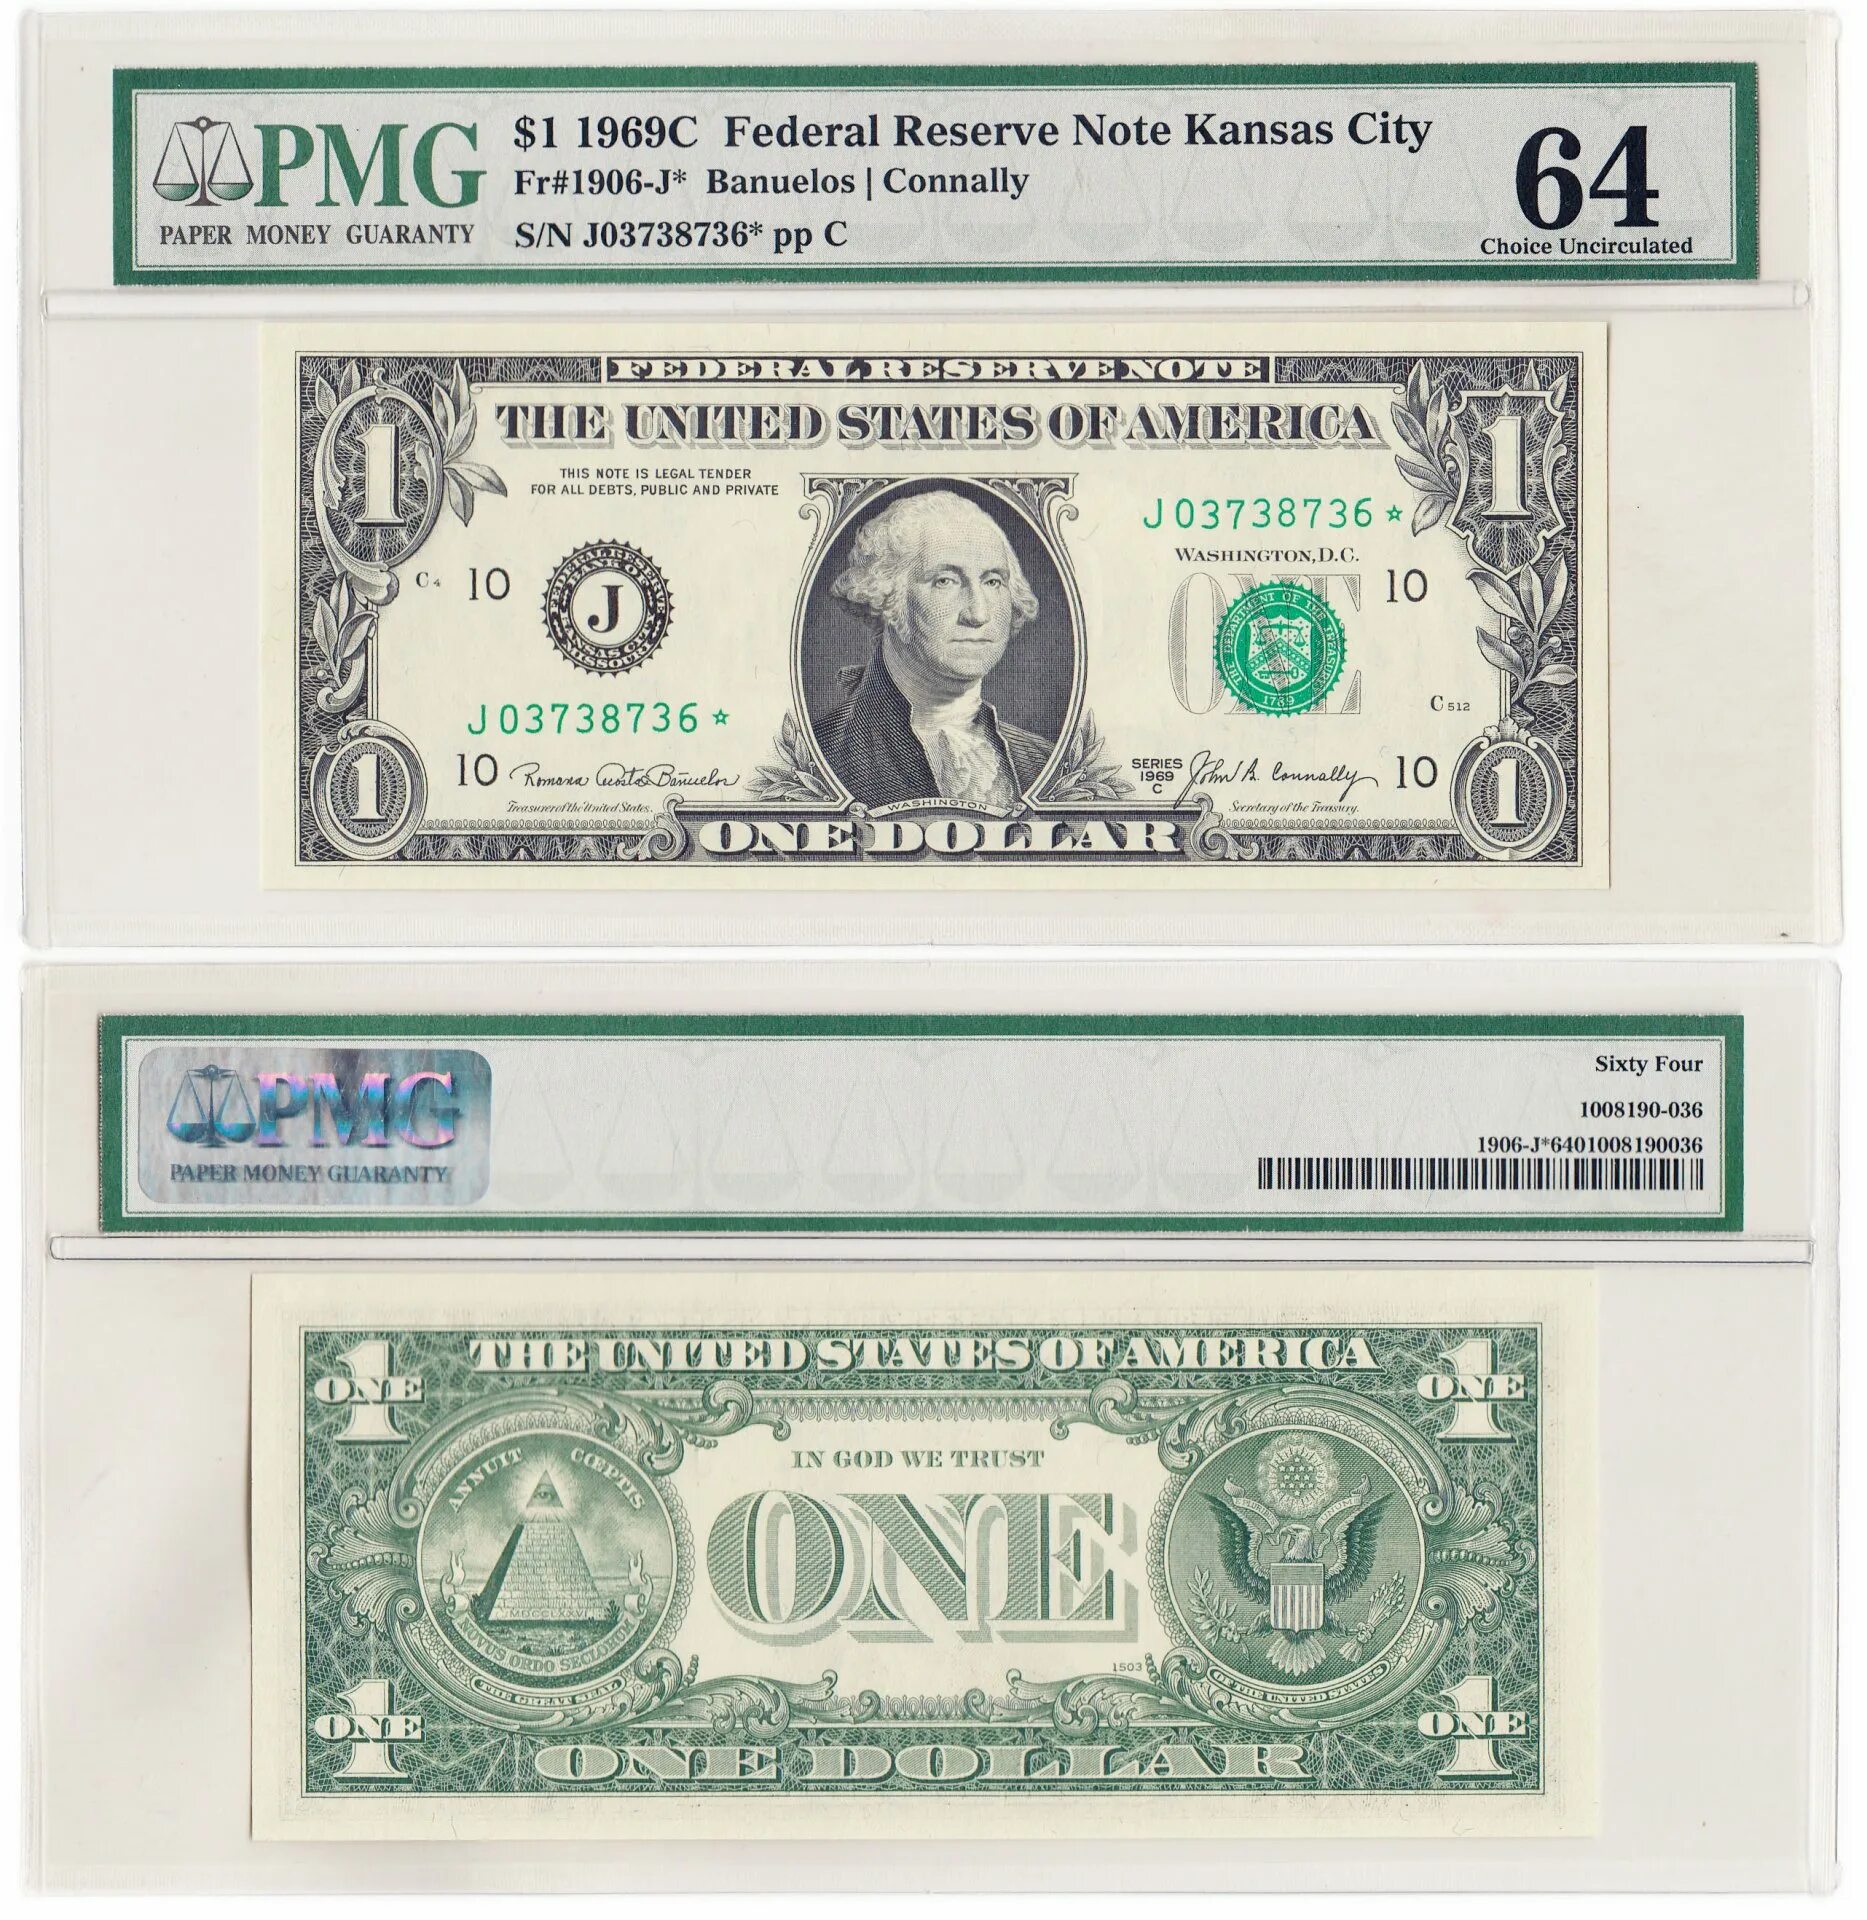 Банкнота 1 доллар. Купюра 1 доллар США. Старые банкноты США. Старые купюры долларов. Купюры доллара старого образца